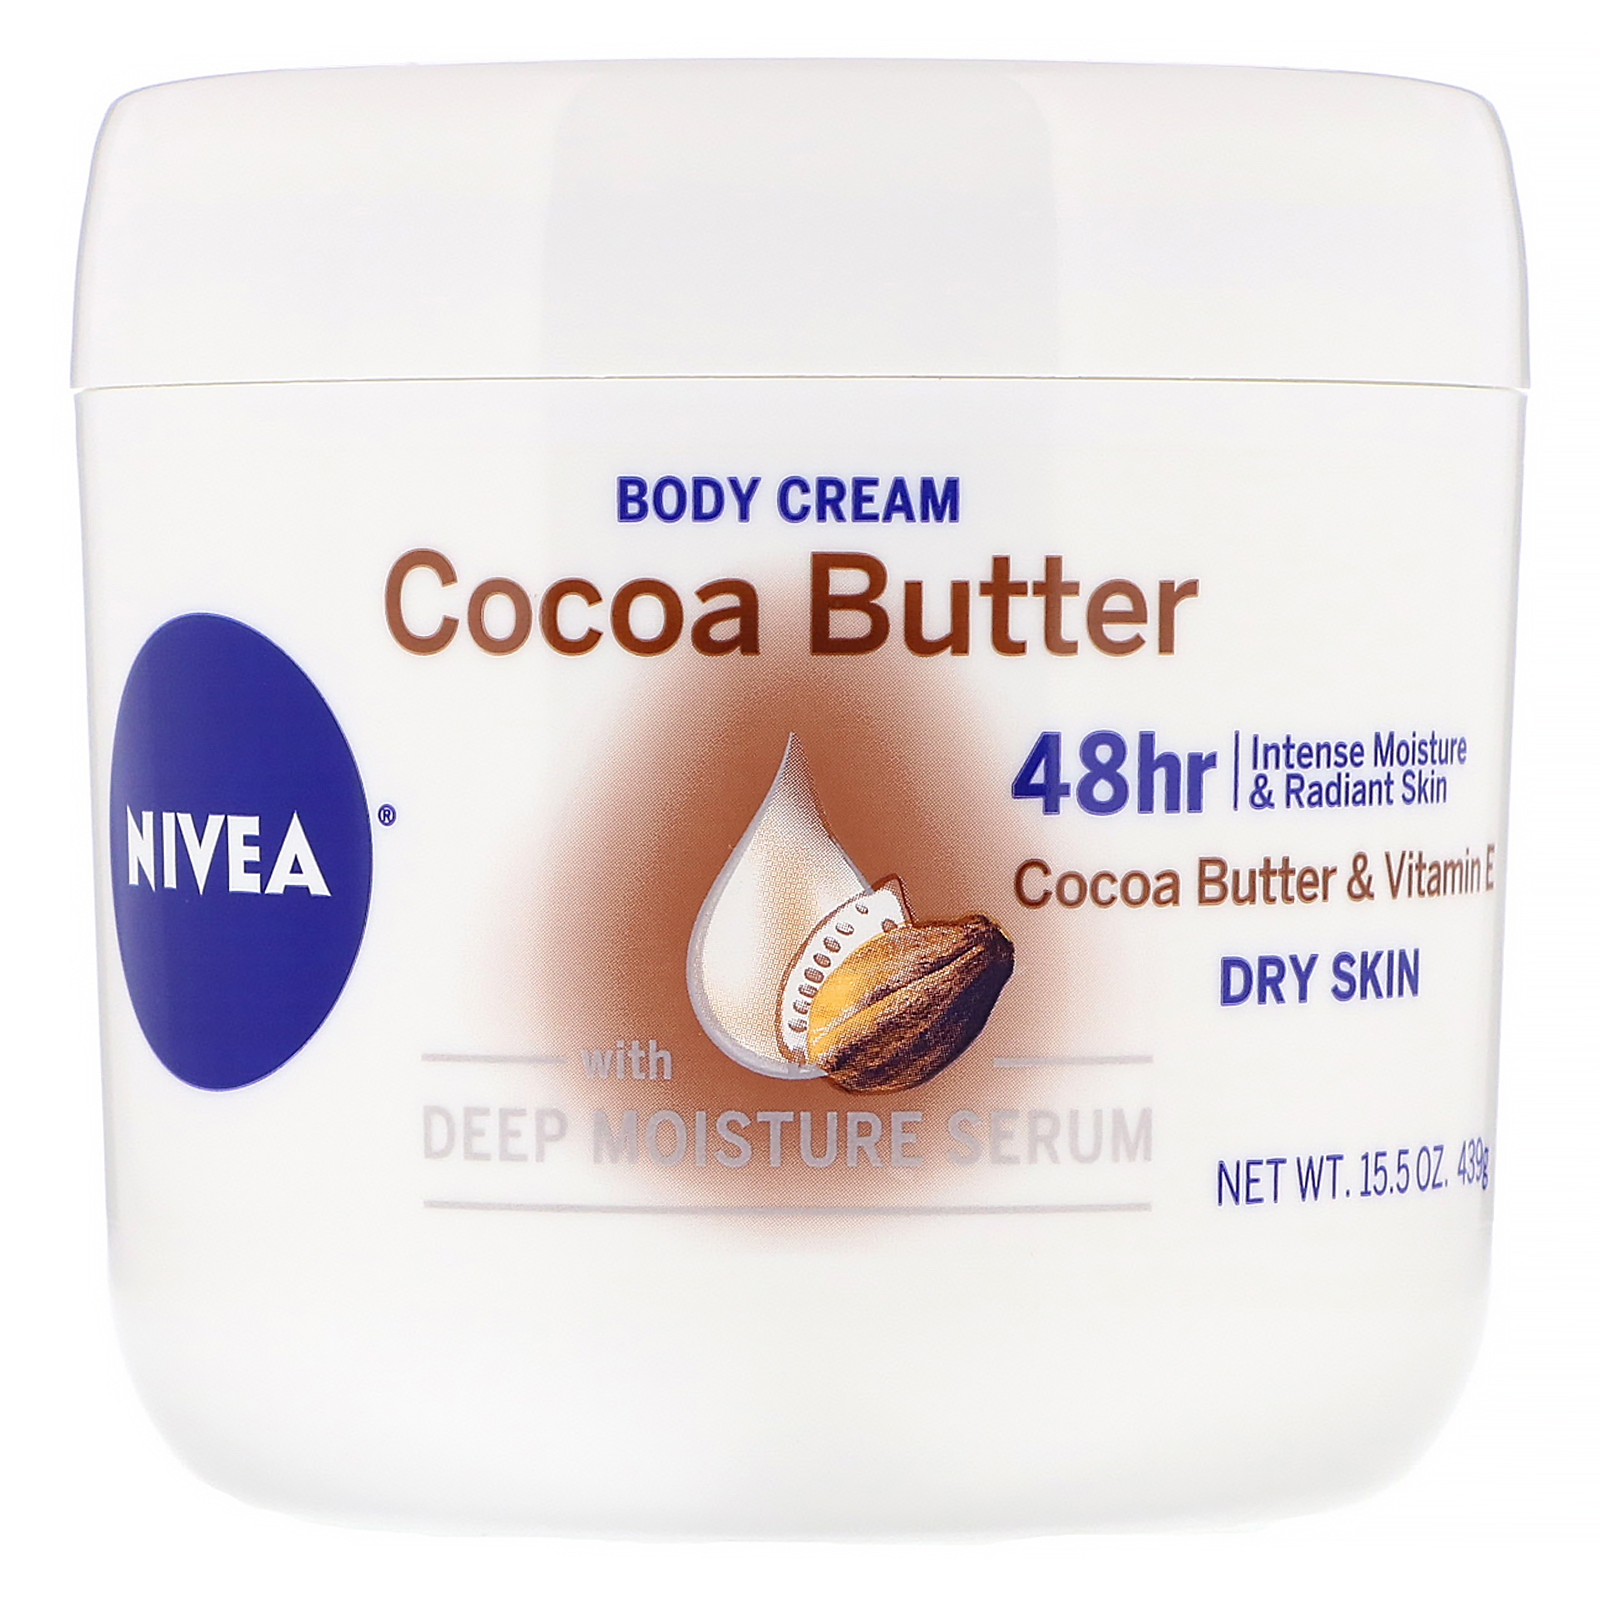 Calamiteit Teleurgesteld Verknald Nivea, Body Cream, Cocoa Butter, 15.5 oz (439 g)